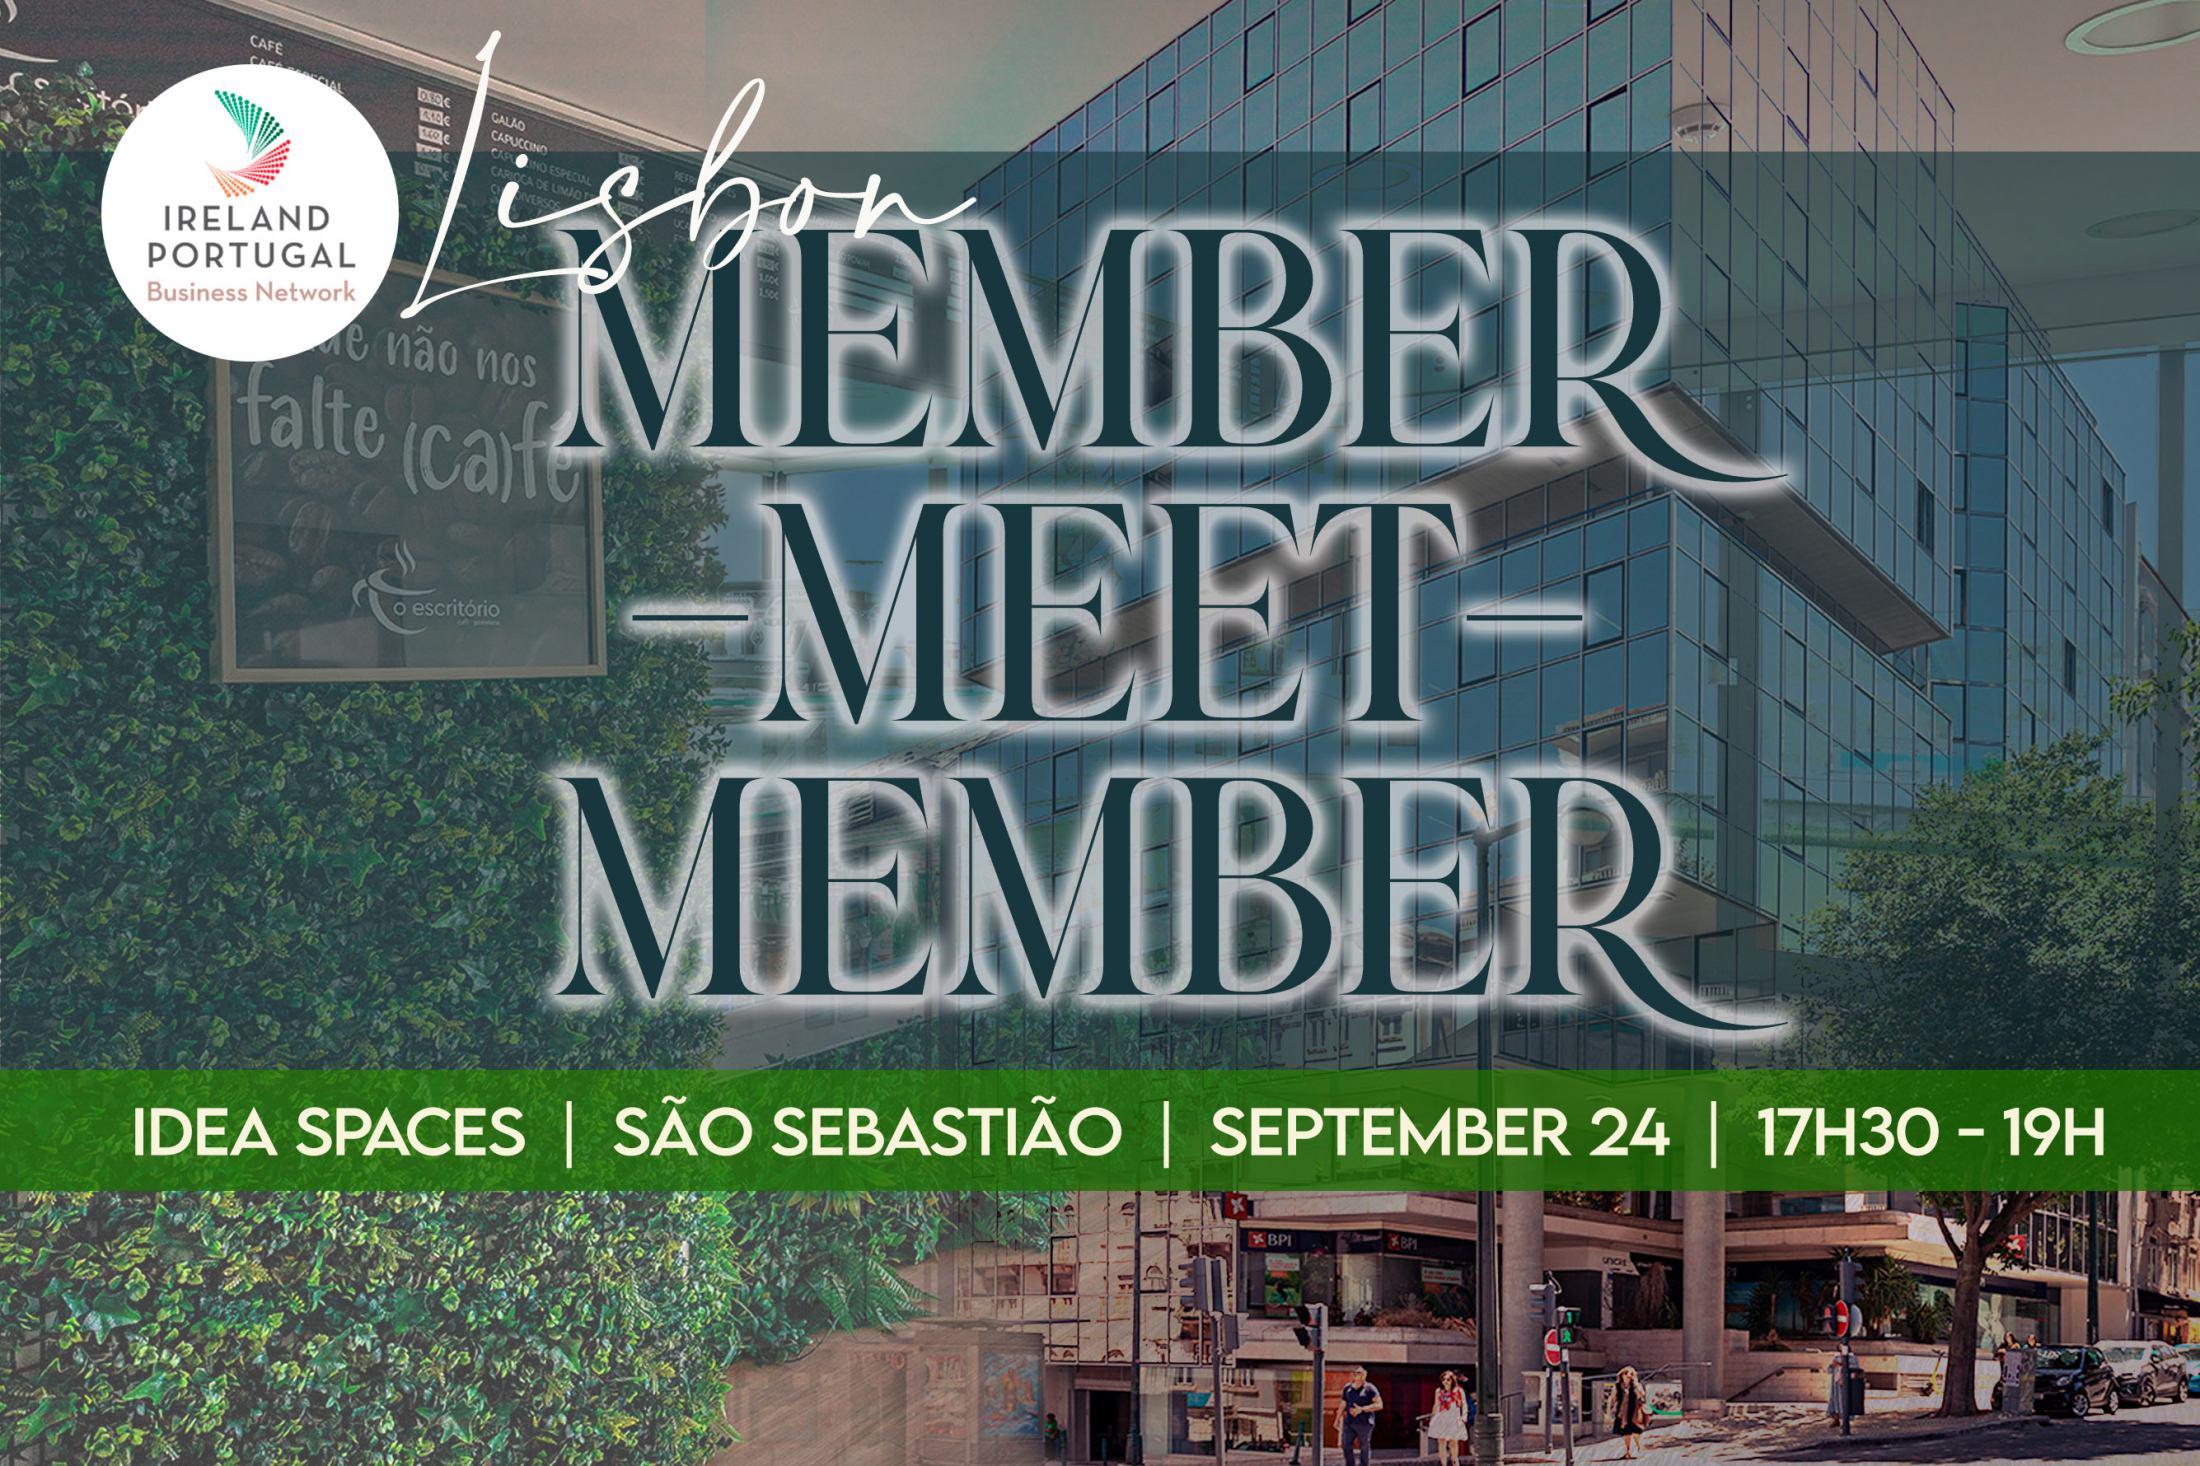 Member meet Member - Lisbon